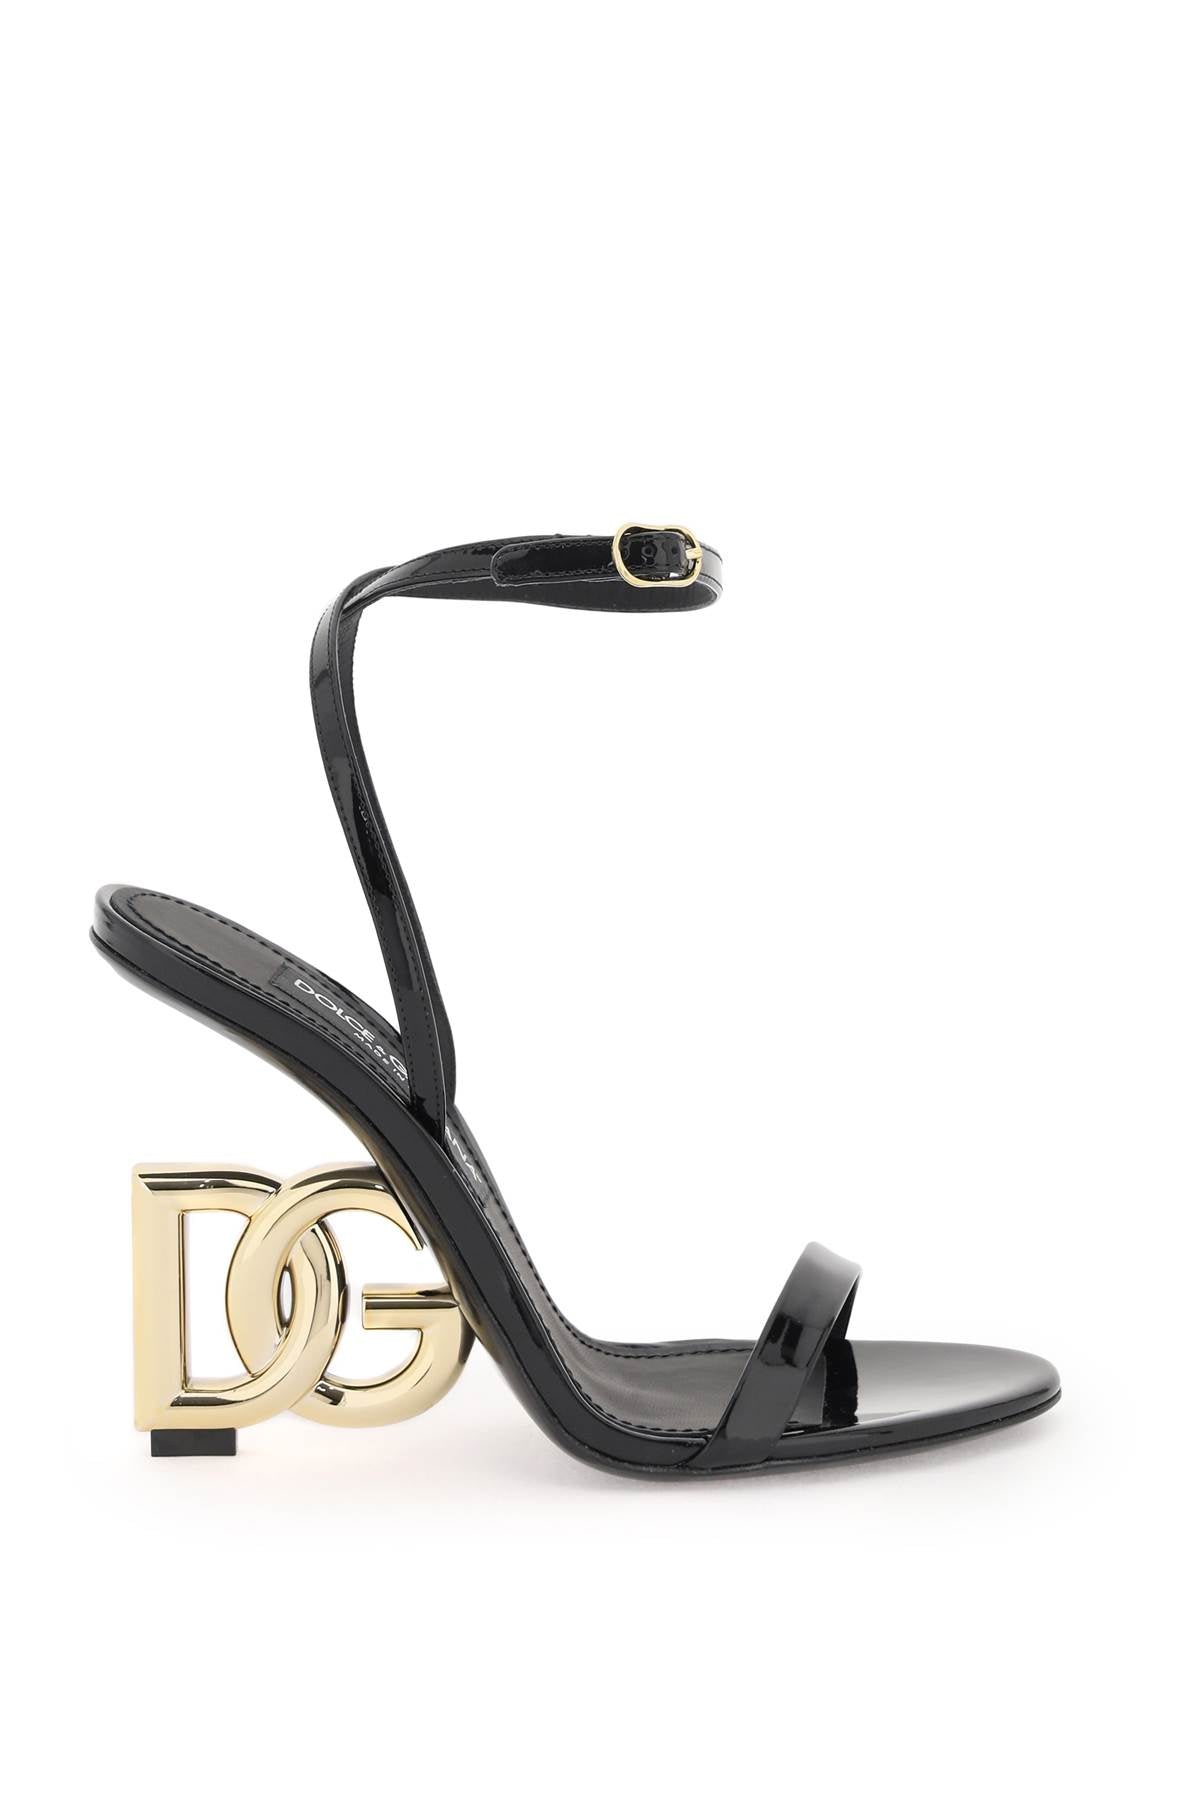 Dolce & Gabbana Sandals With Dg Heel   Black